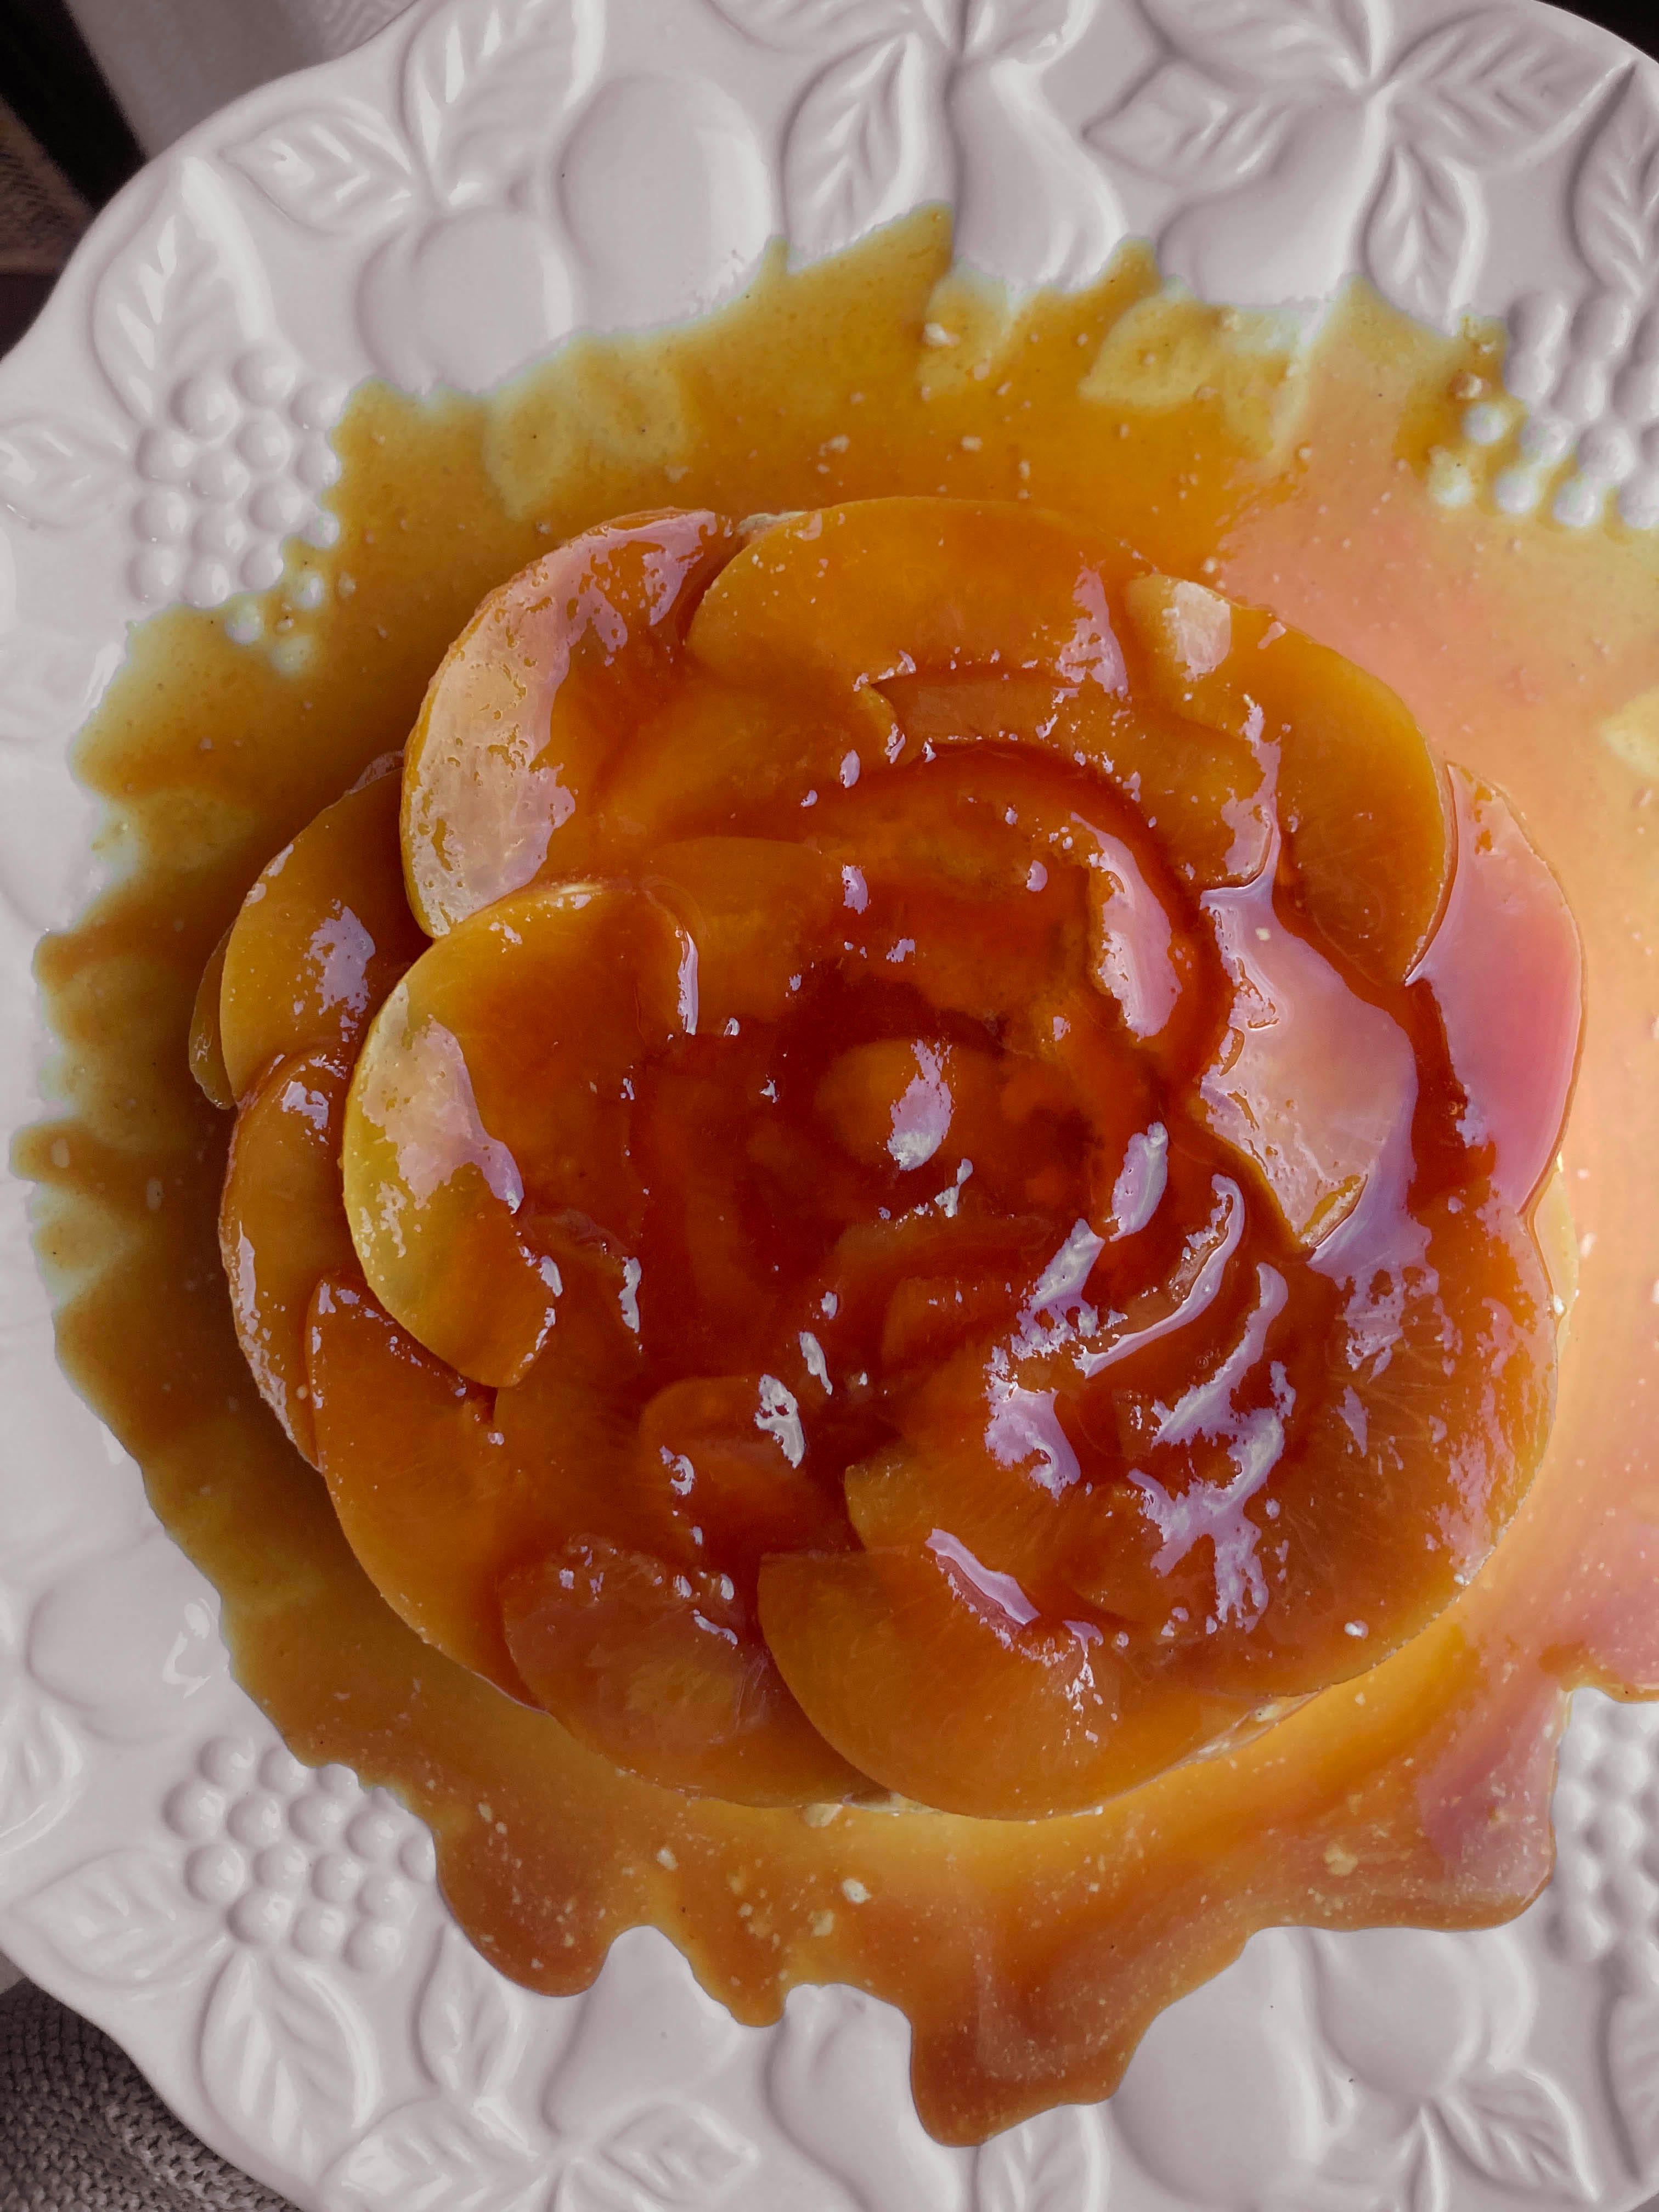 Kitchen Project #24: Peach creme caramel - by Nicola Lamb